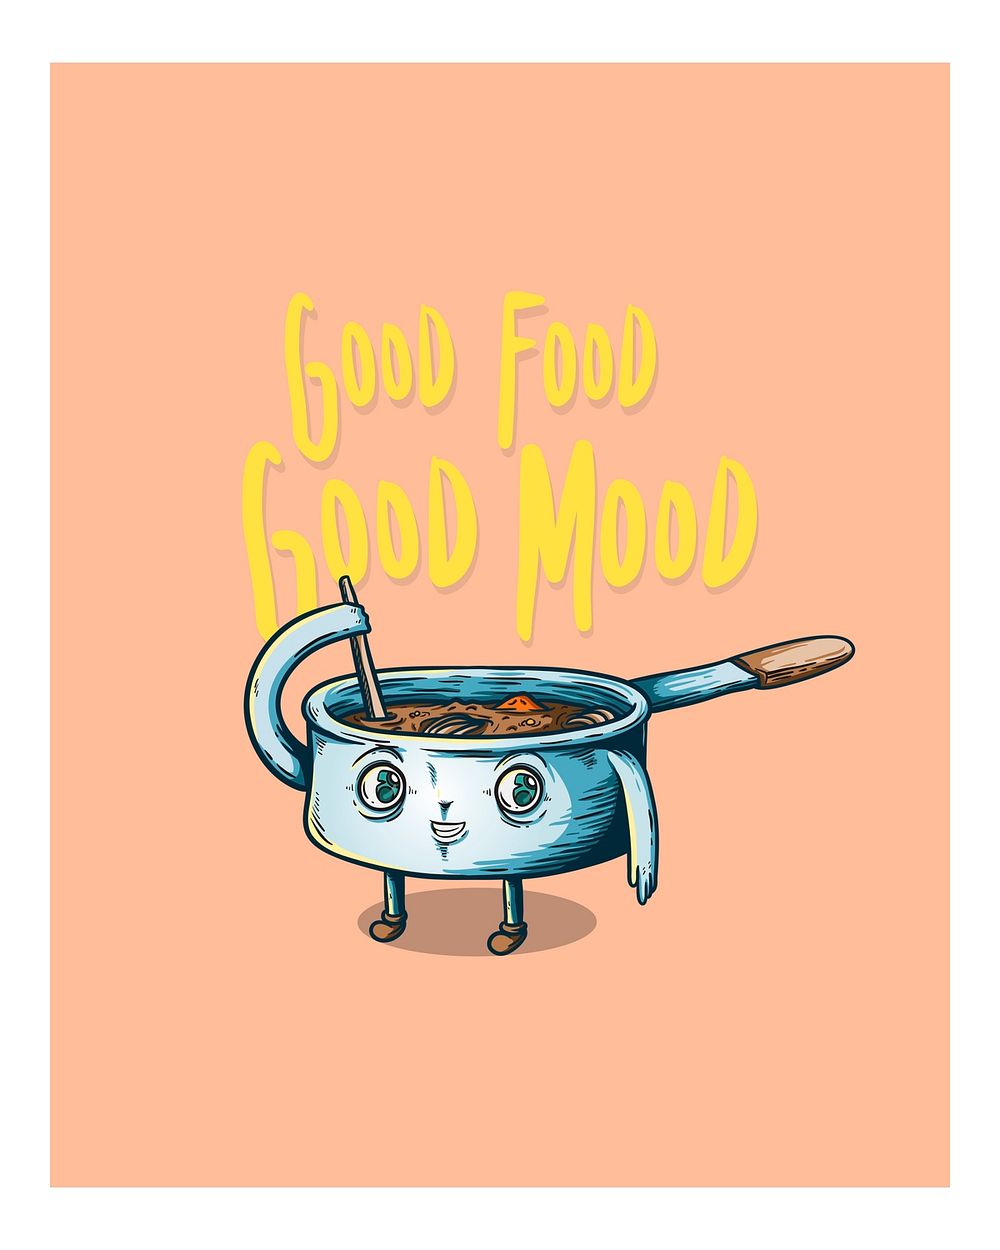 Good food, Good mood illustration wall art print and poster.